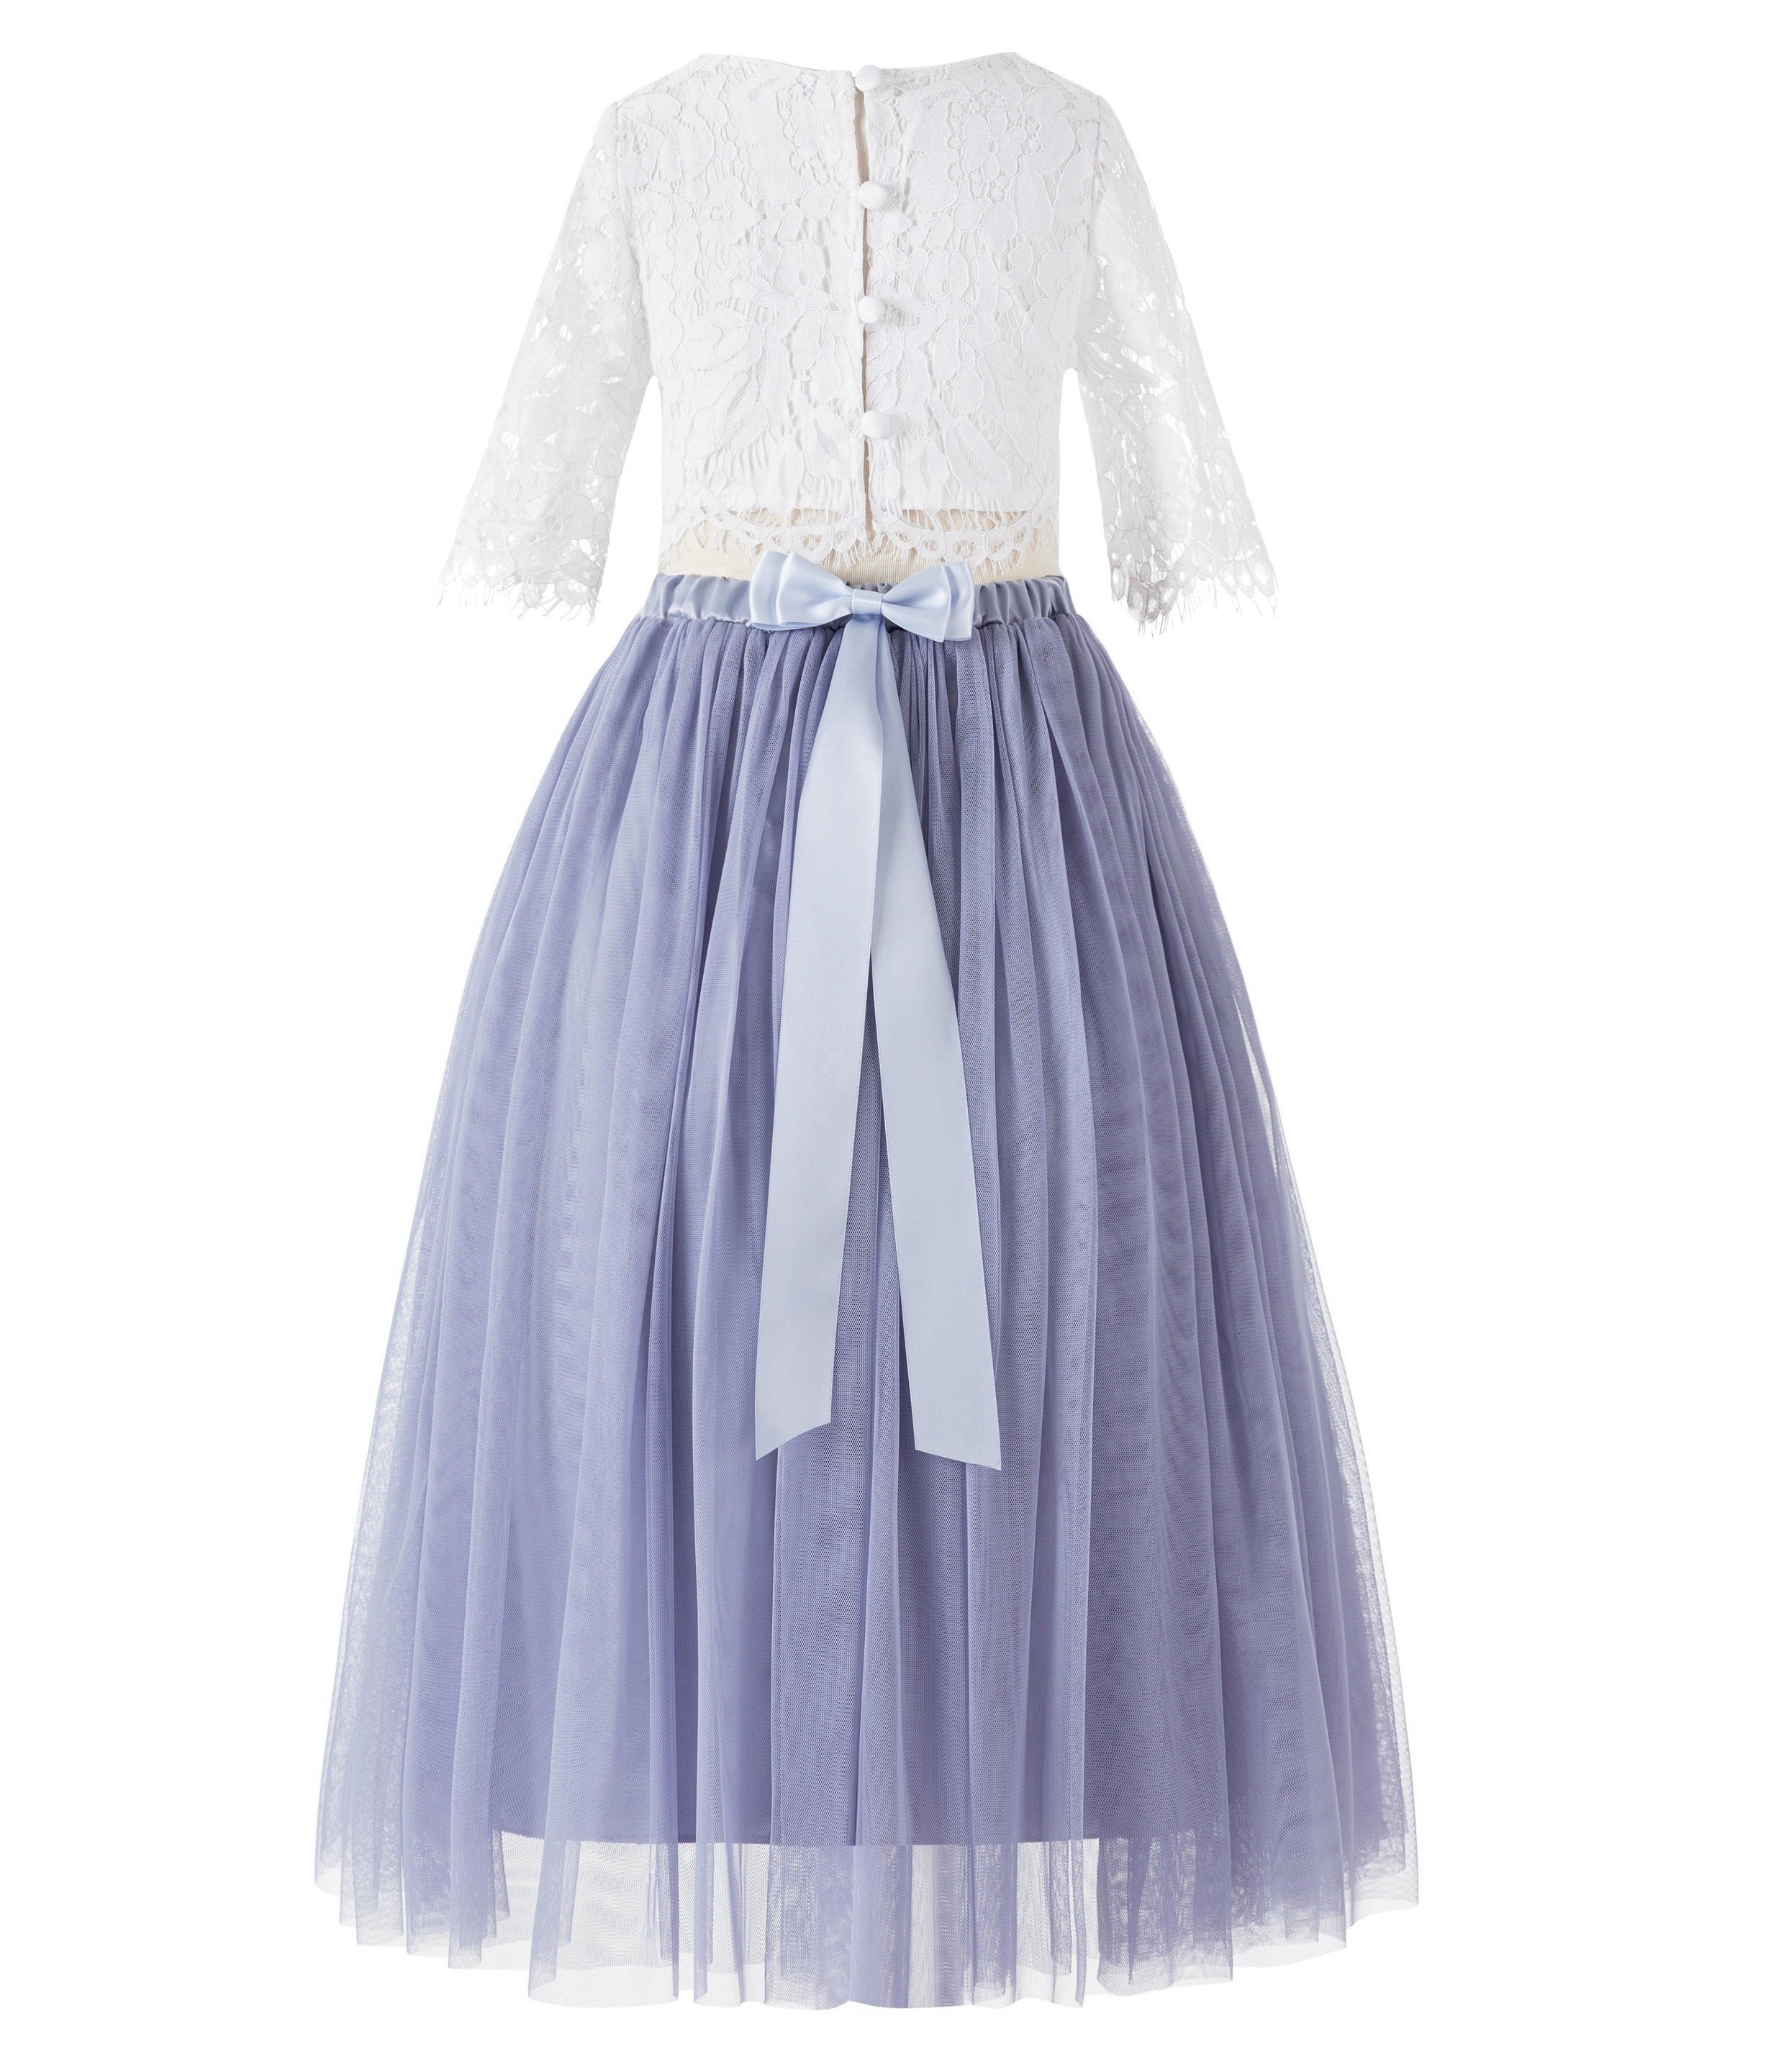 Dusty Lavender Eyelash Lace Flower Girl Dress A-Line Tulle Dress LG5